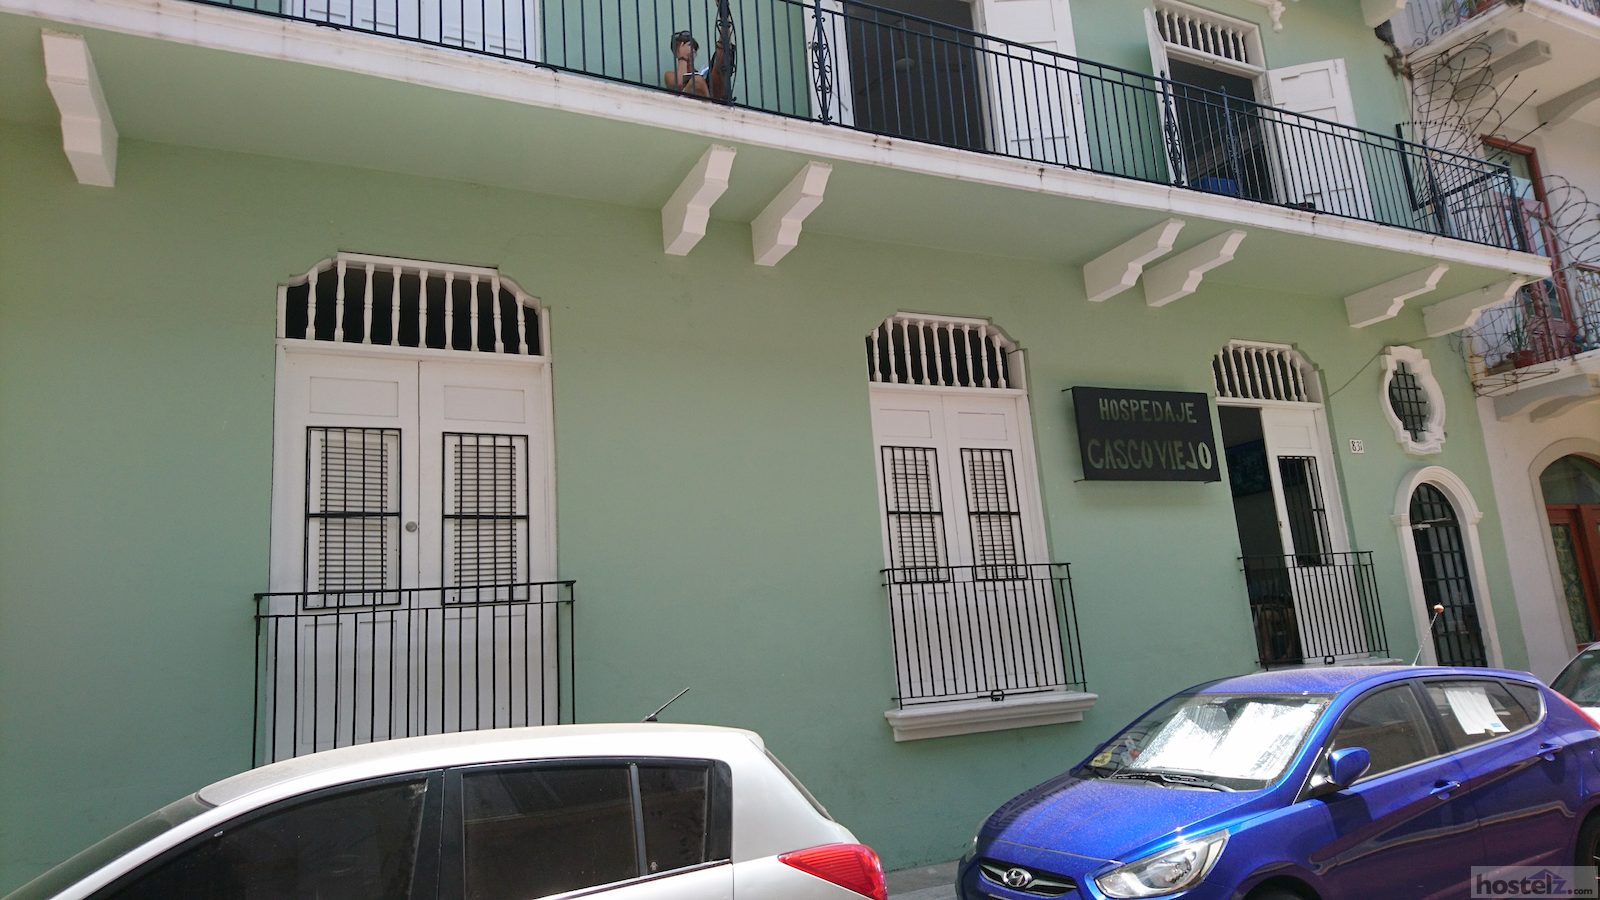 Hospedaje Casco Viejo, Panama City